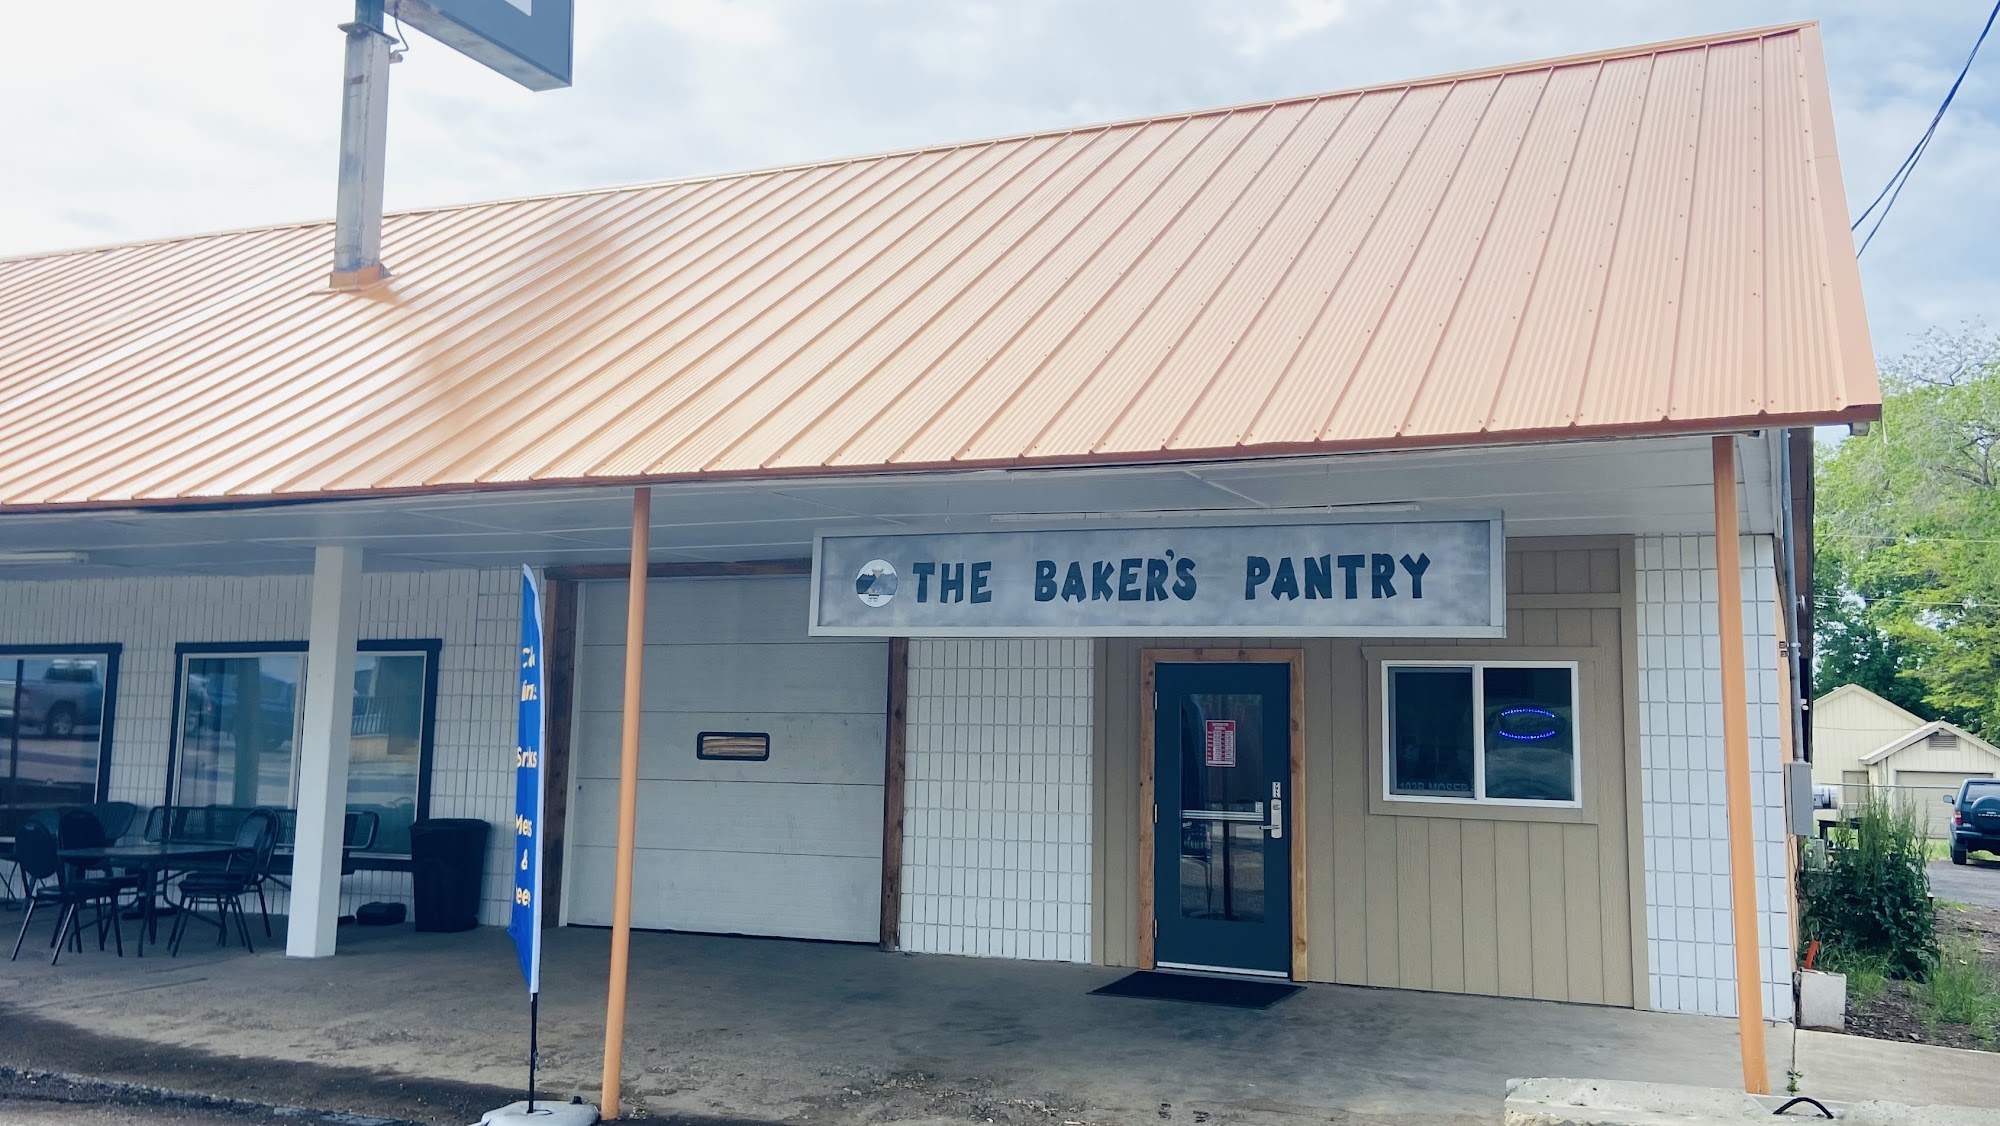 The Baker's Pantry